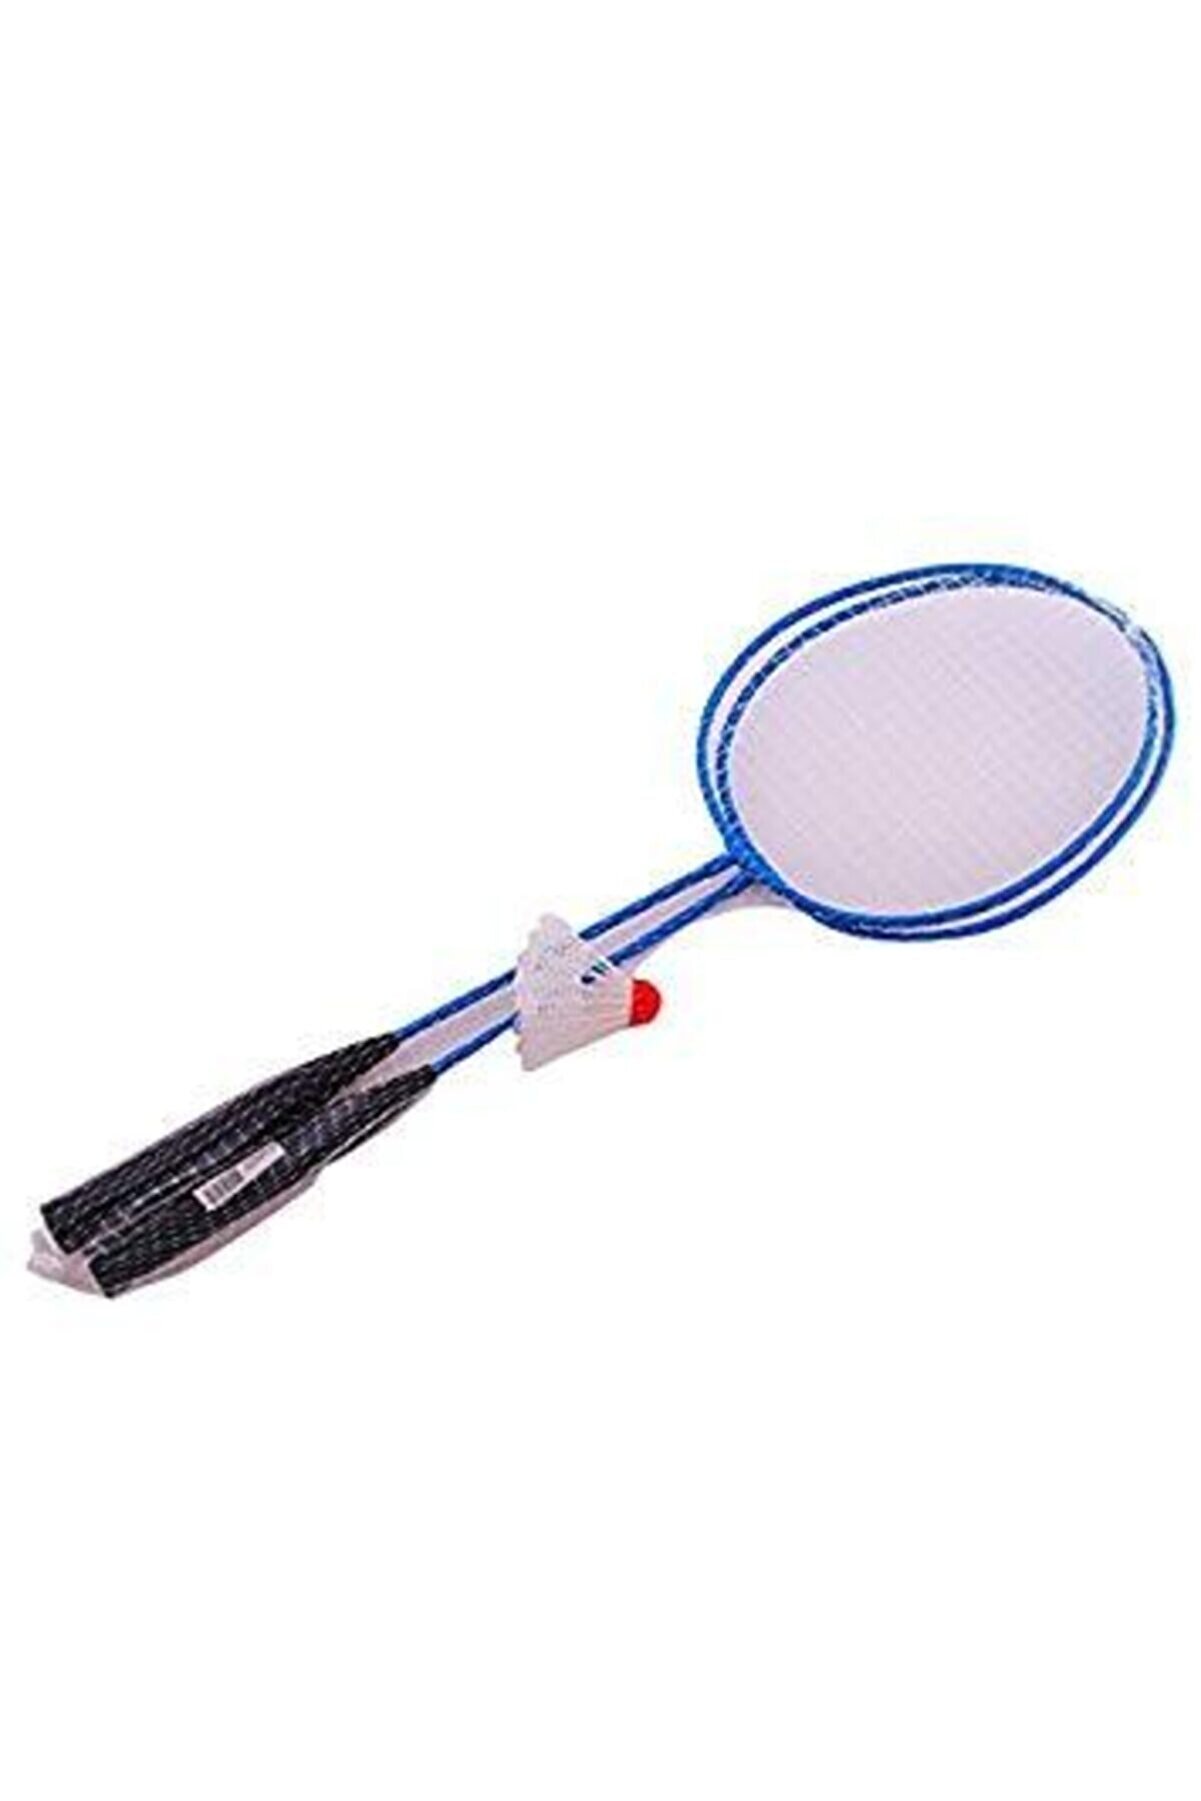 Avessa Badminton Raketi Set 2 Raket 1 Top Fileli Set